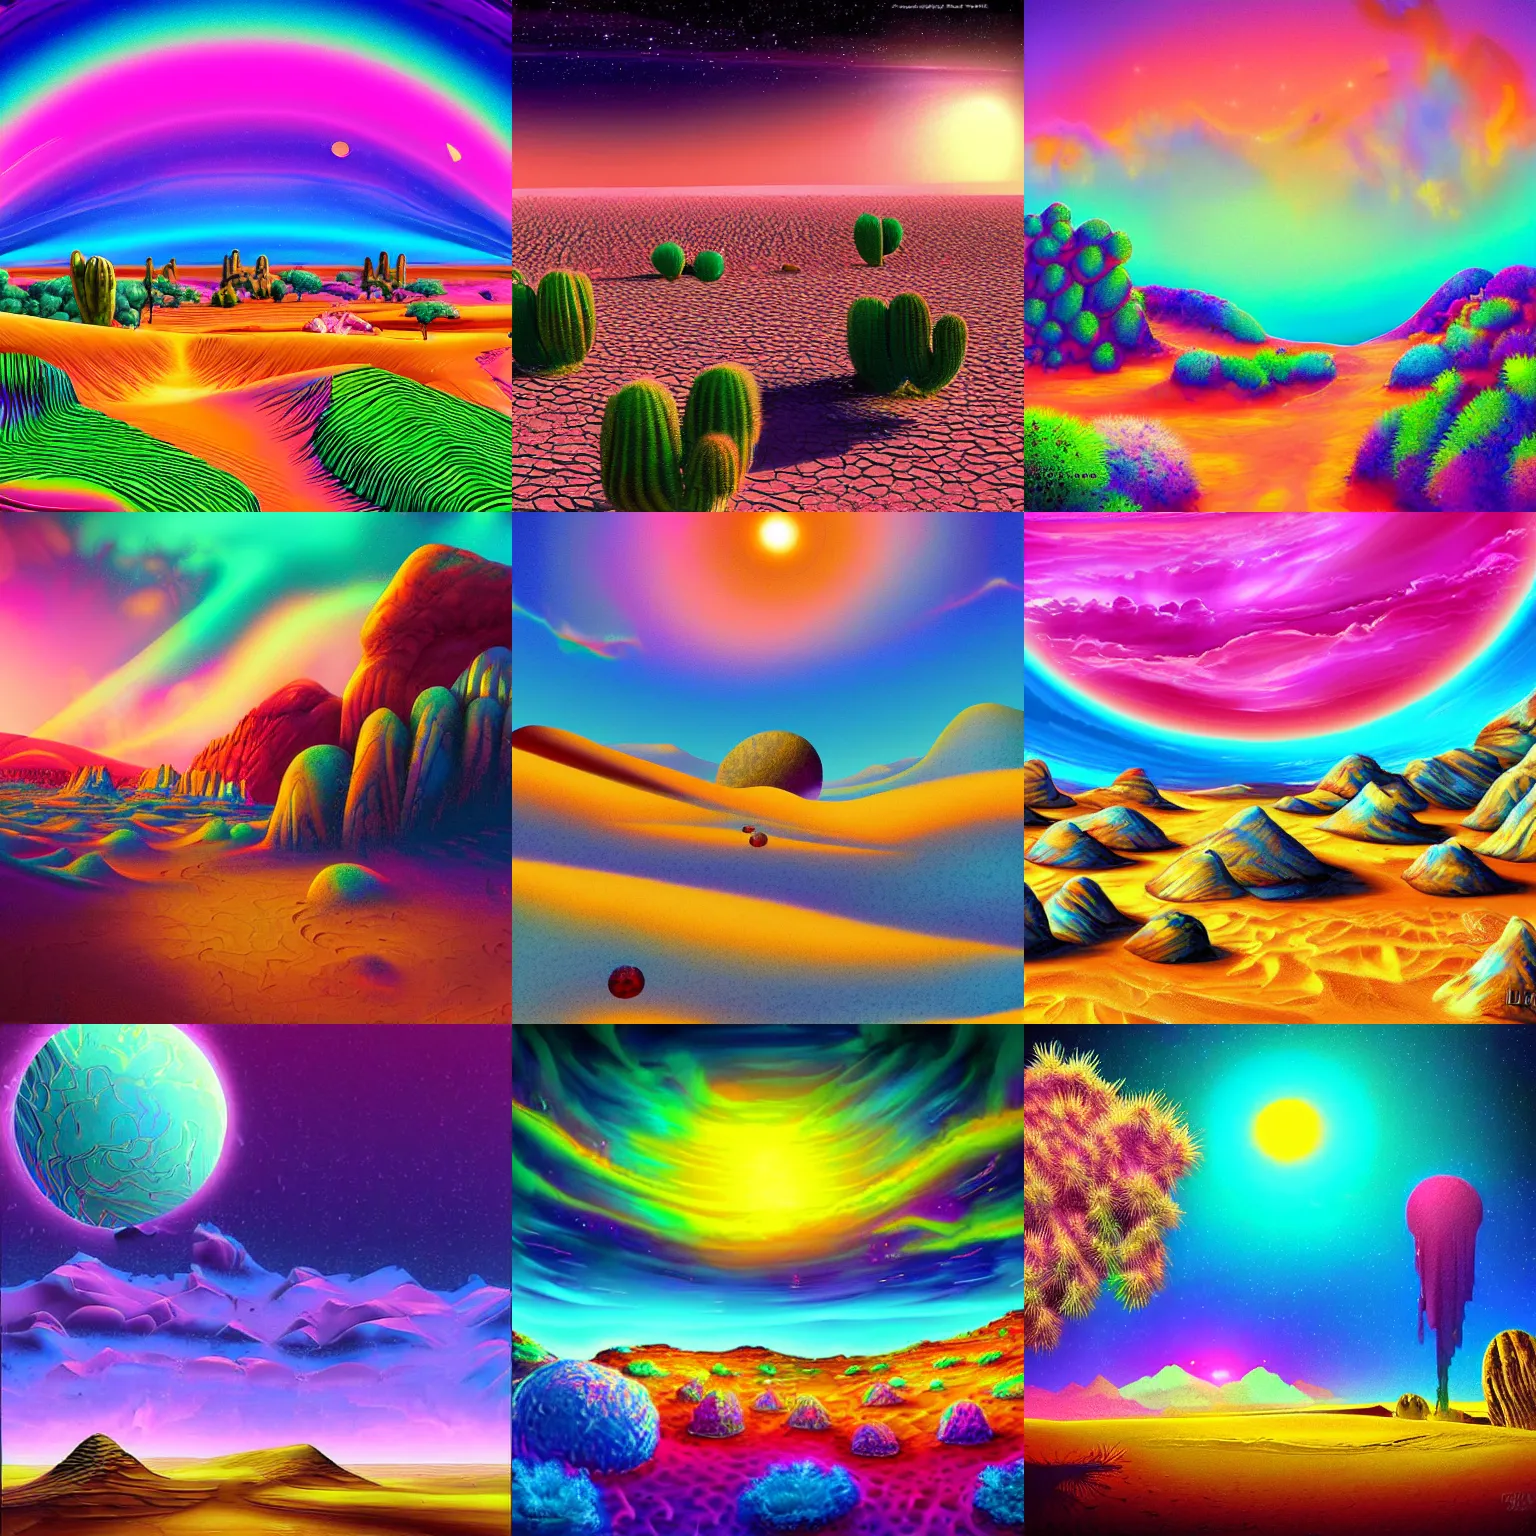 Prompt: desert landscape on an alien planet, atmospheric, colorful, digital art by lisa frank